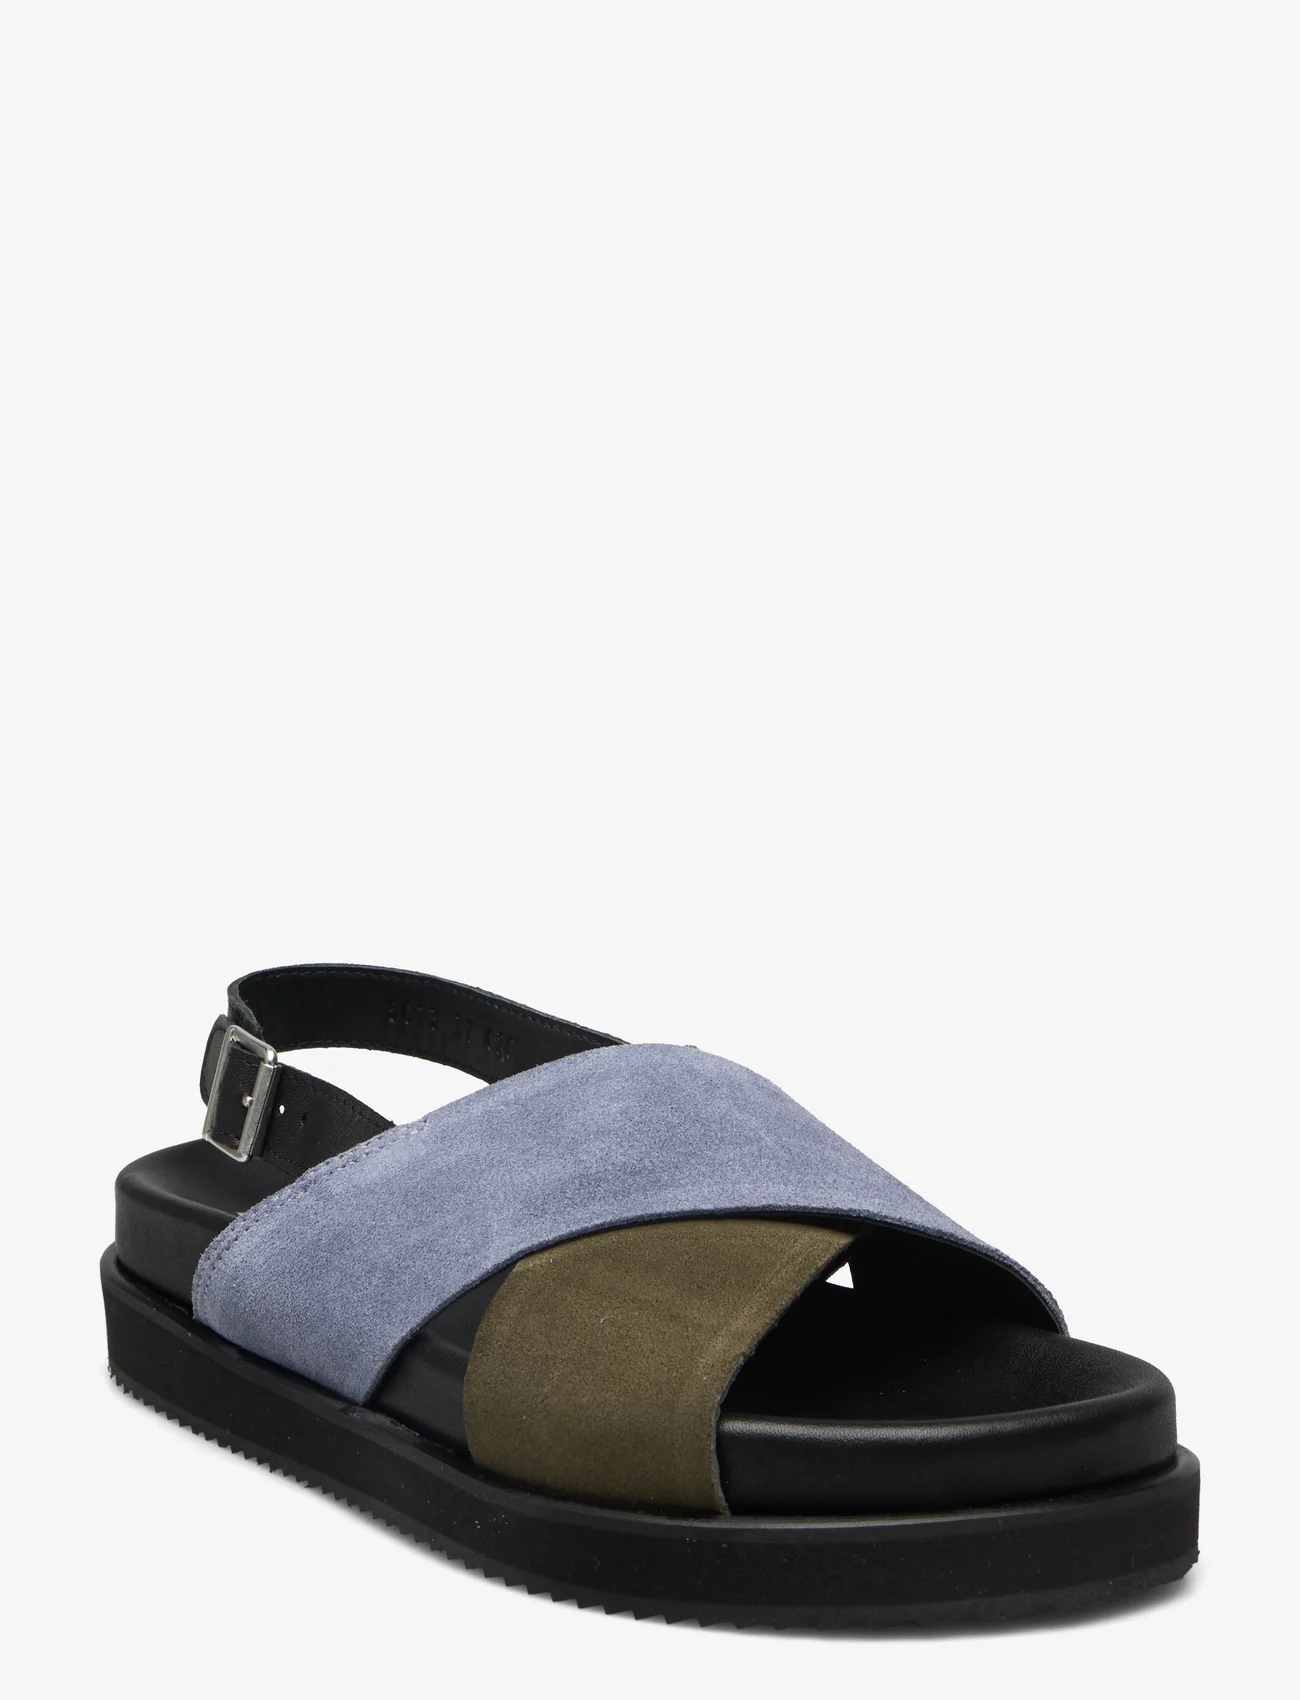 ANGULUS - Sandals - flat - open toe - op - flate sandaler - 1604/2244/2242 black/green/lig - 0